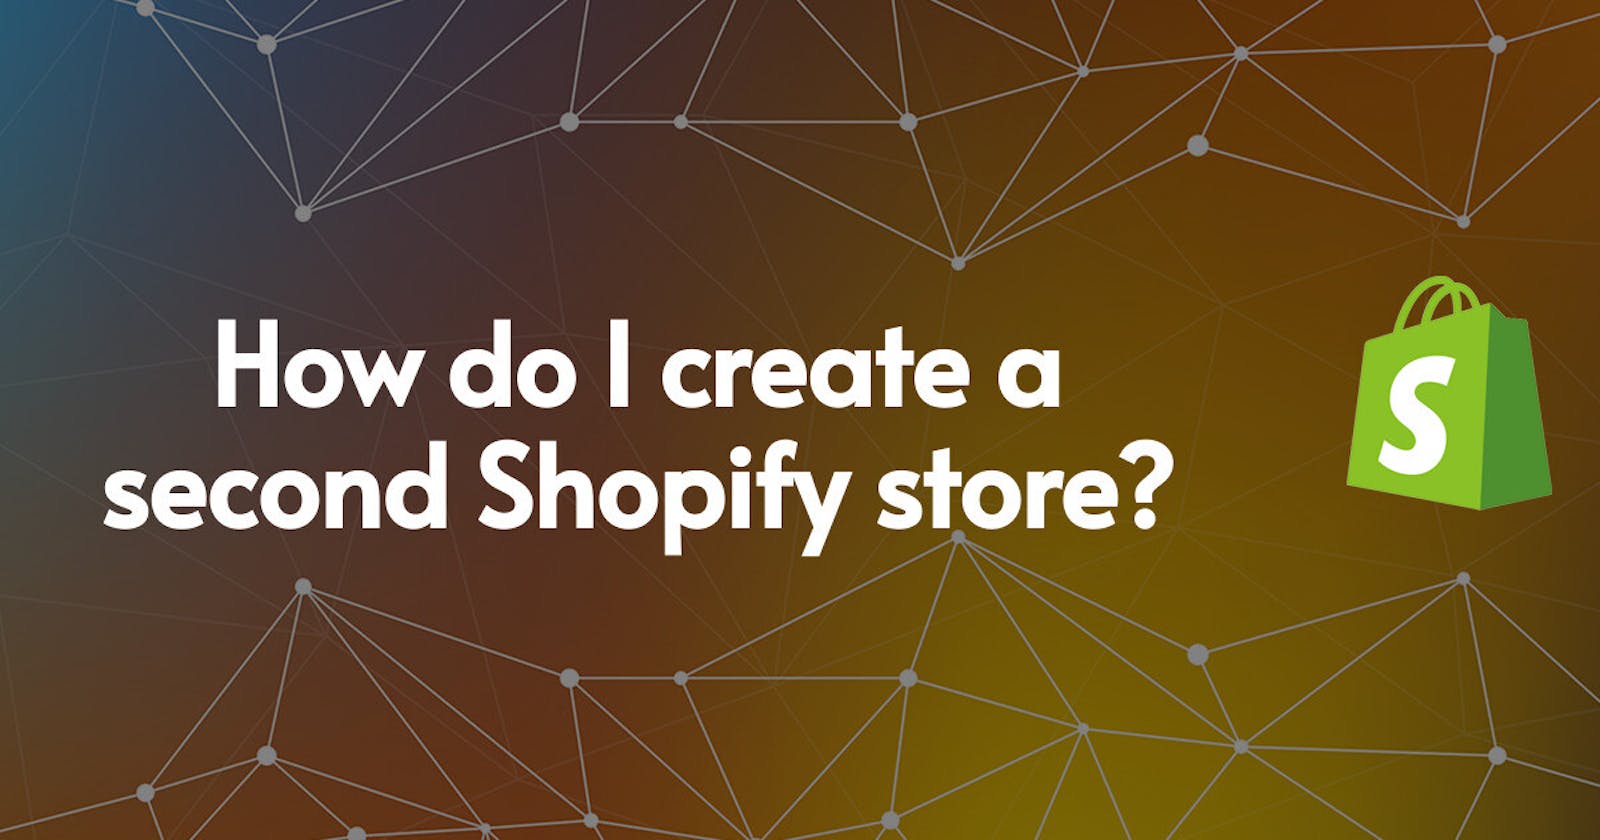 How do I create a second Shopify store?